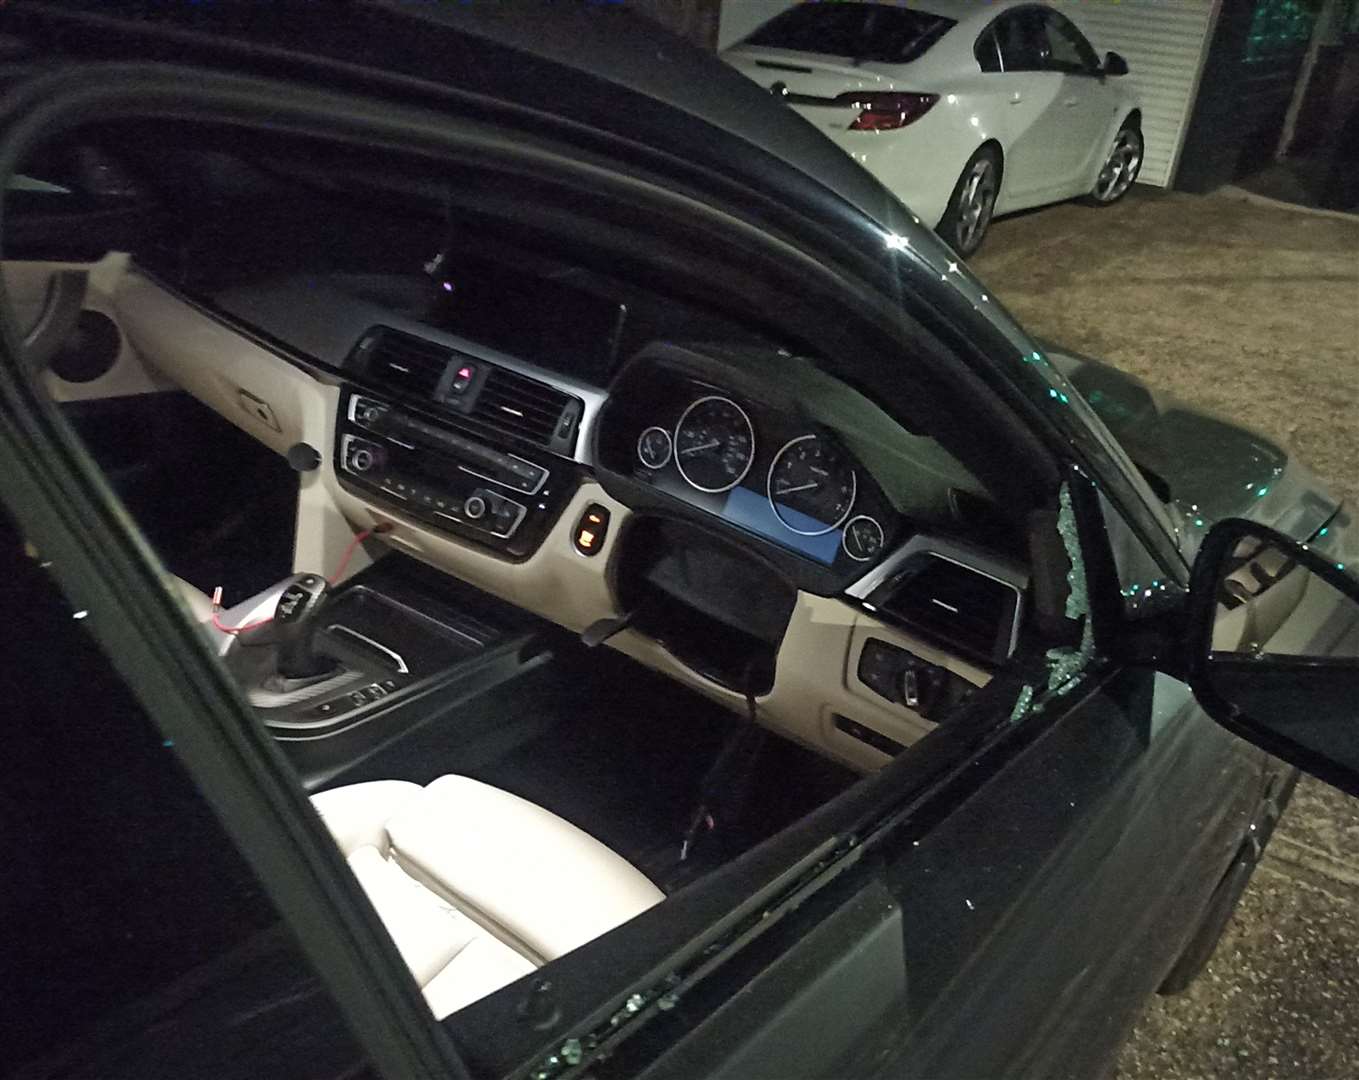 Steering wheels are being stolen from BMWs around Chatham